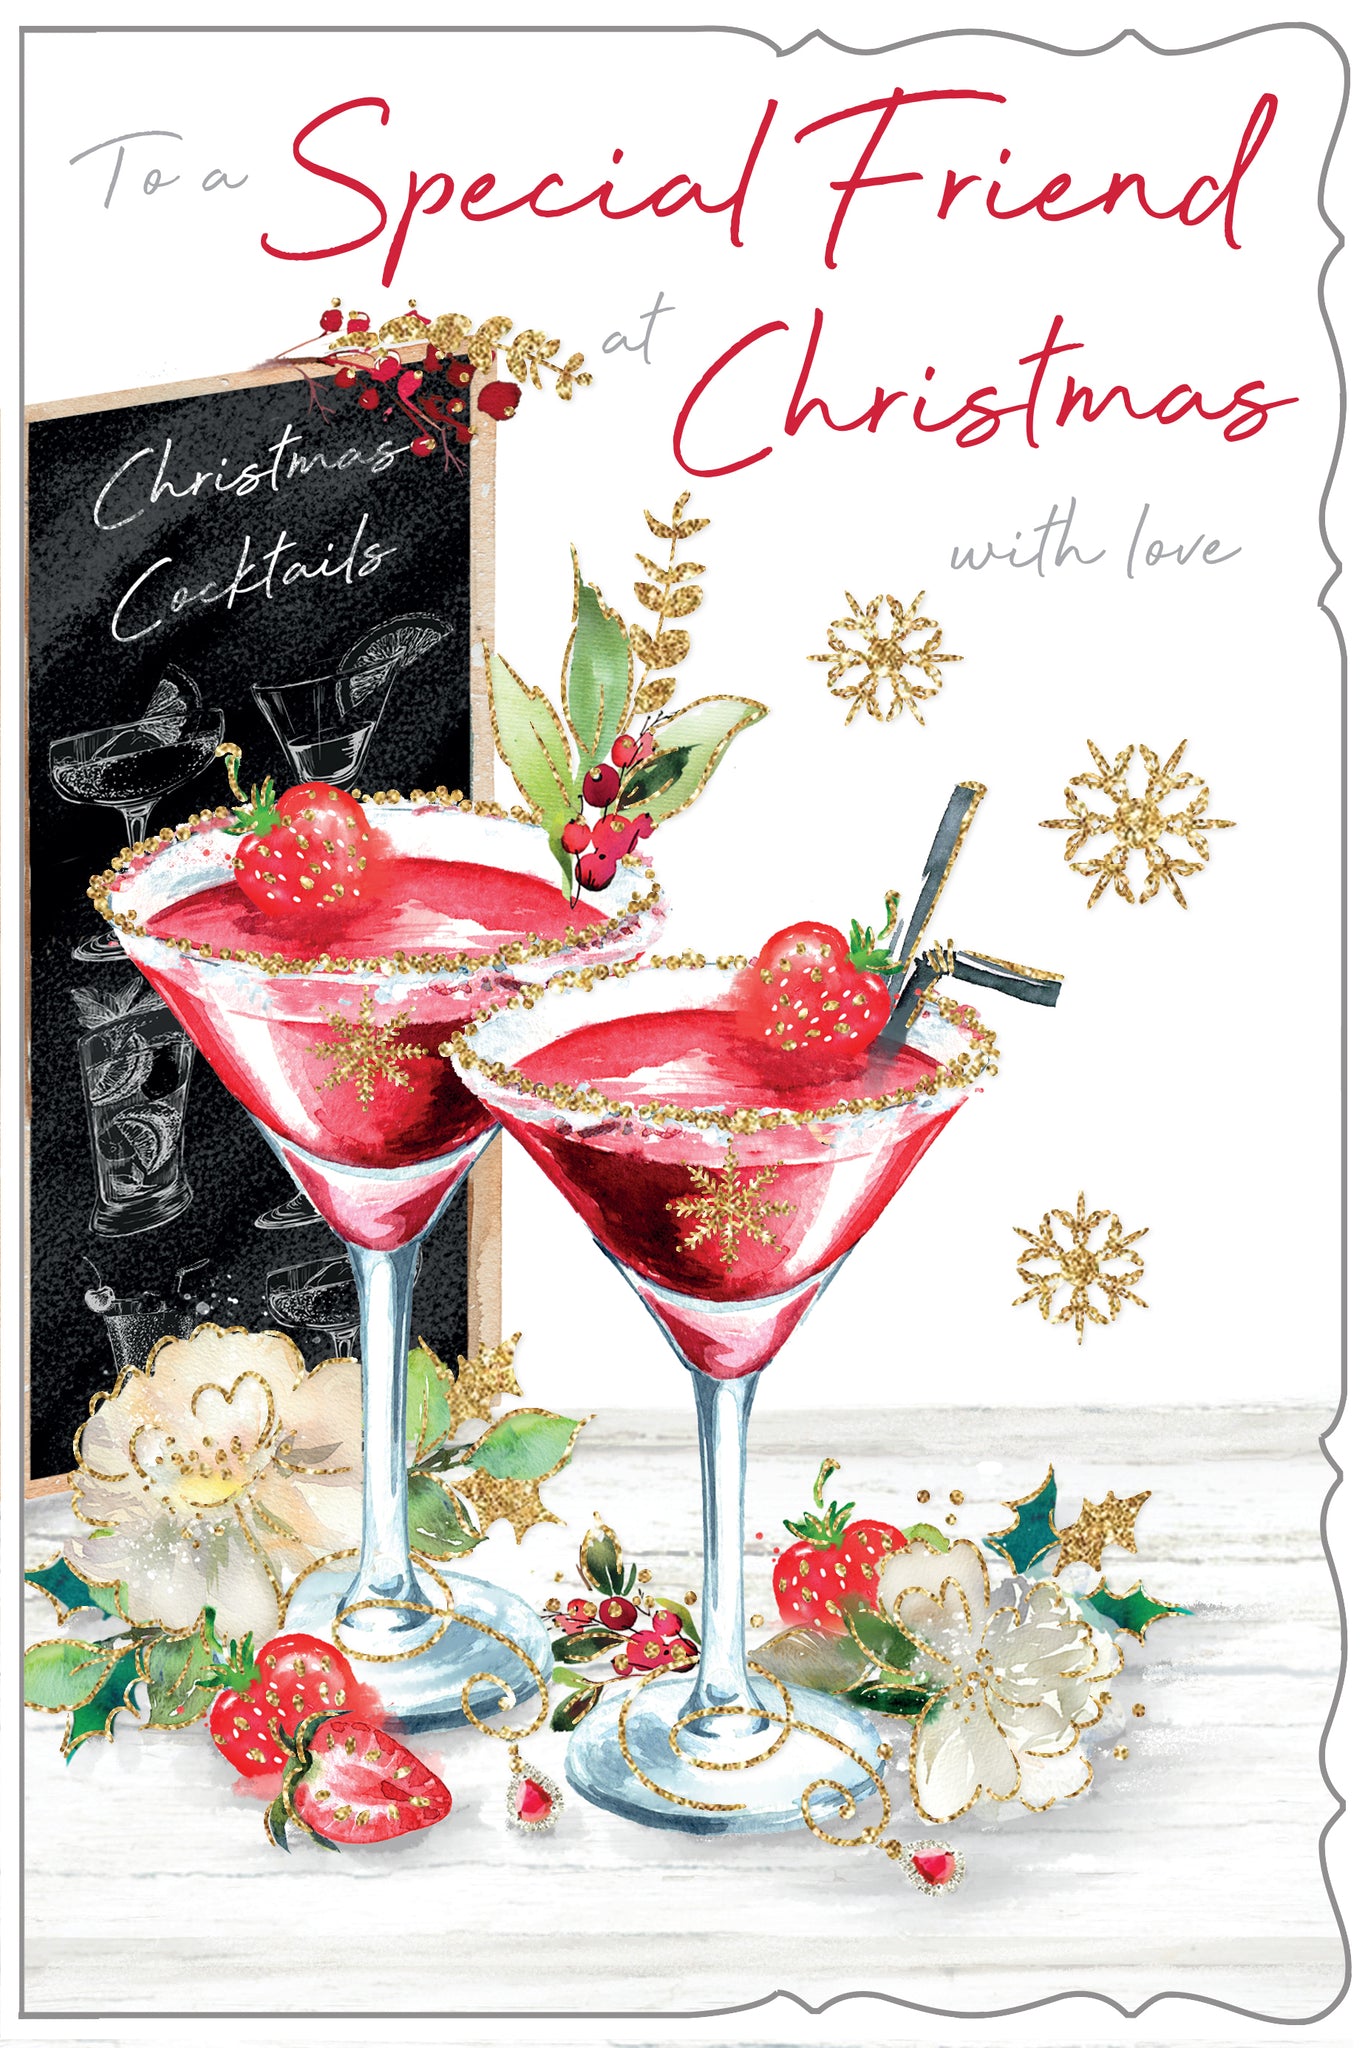 Special friend Christmas card - Christmas cocktails